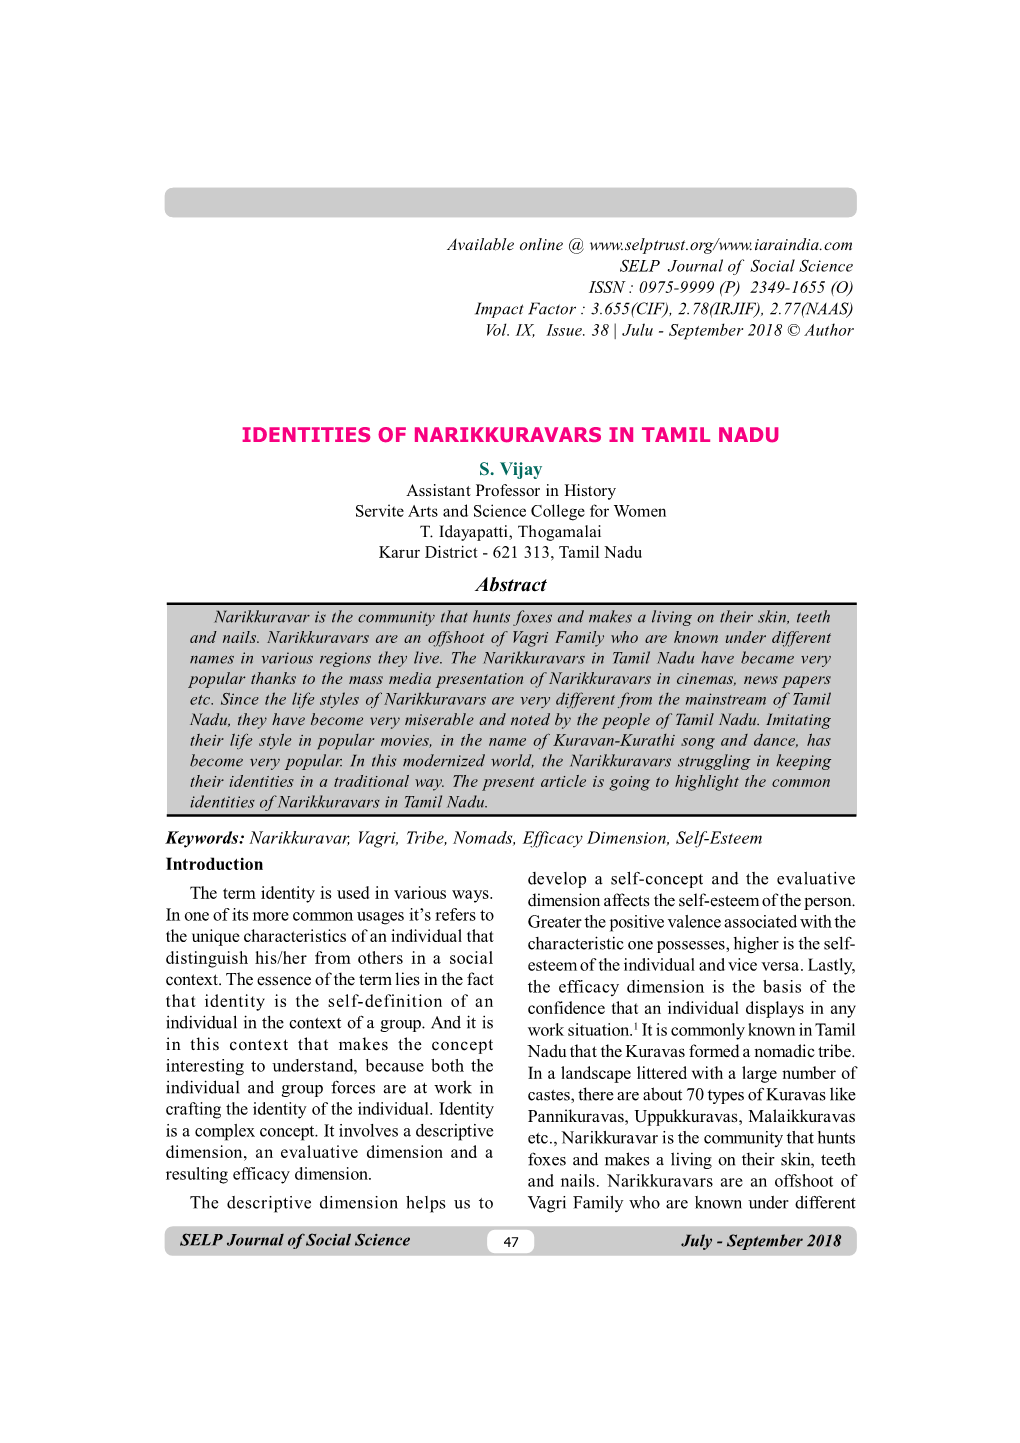 IDENTITIES of NARIKKURAVARS in TAMIL NADU Abstract